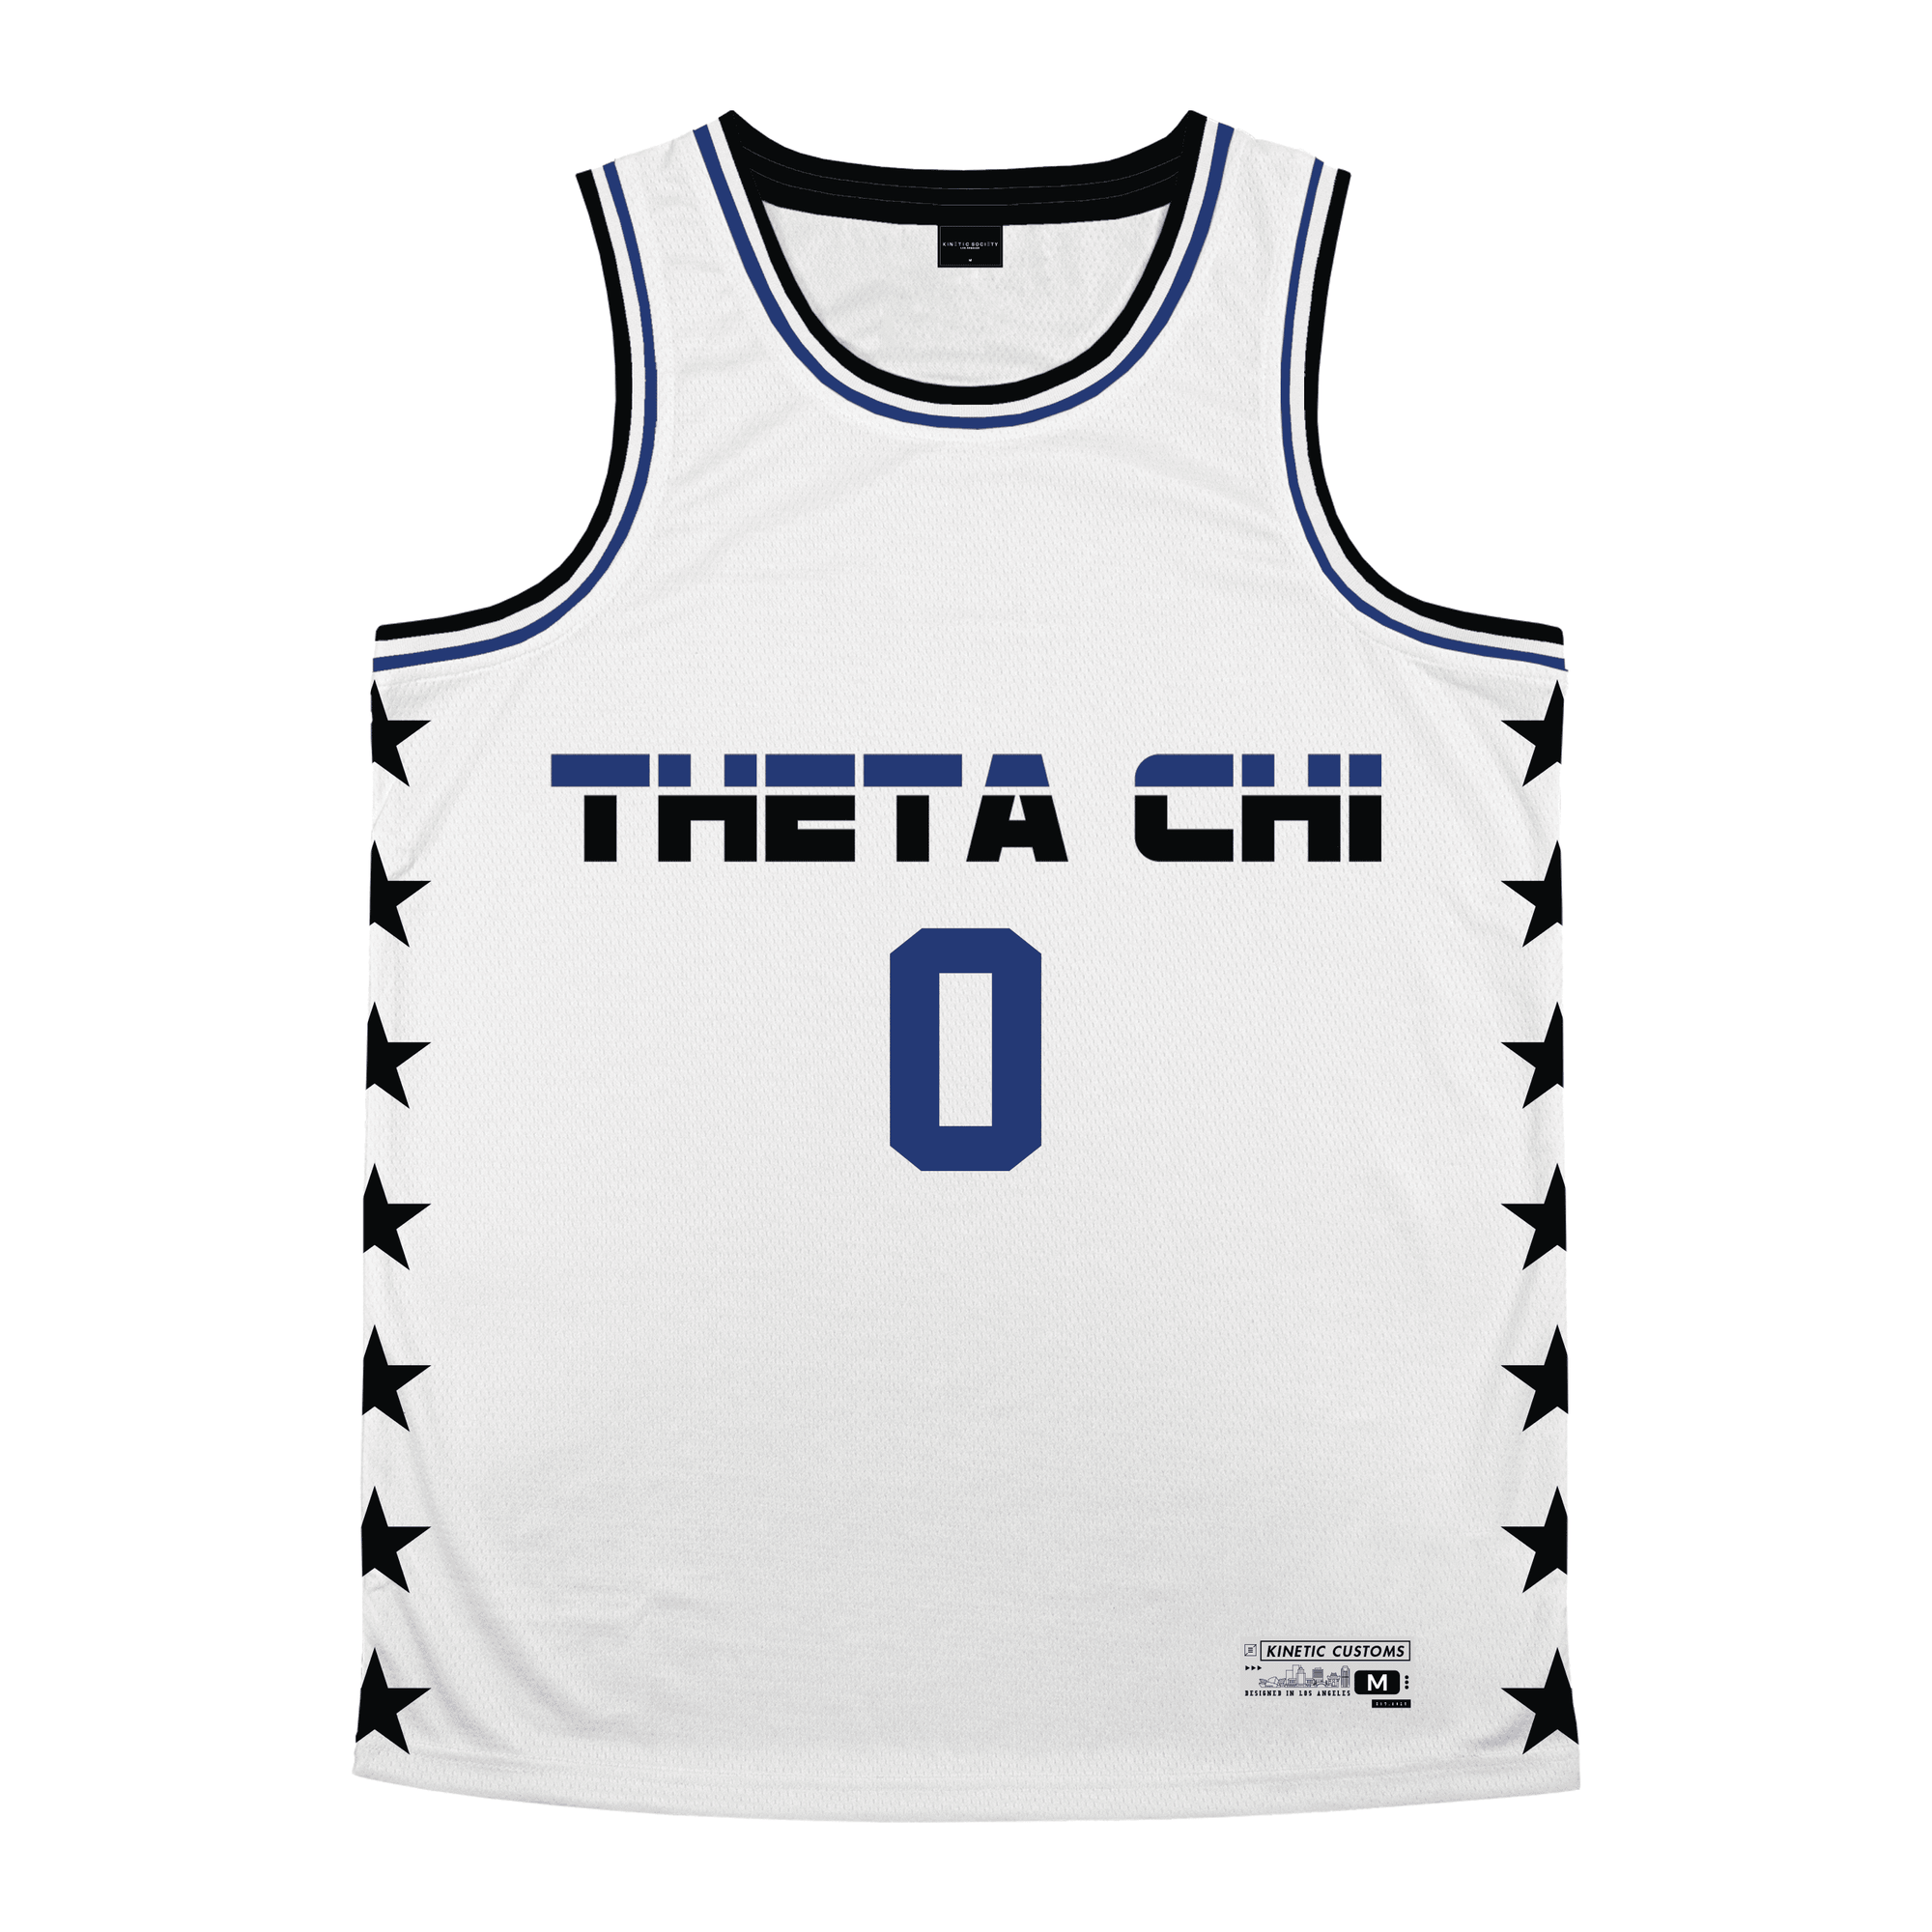 Theta Chi - Black Star Basketball Jersey